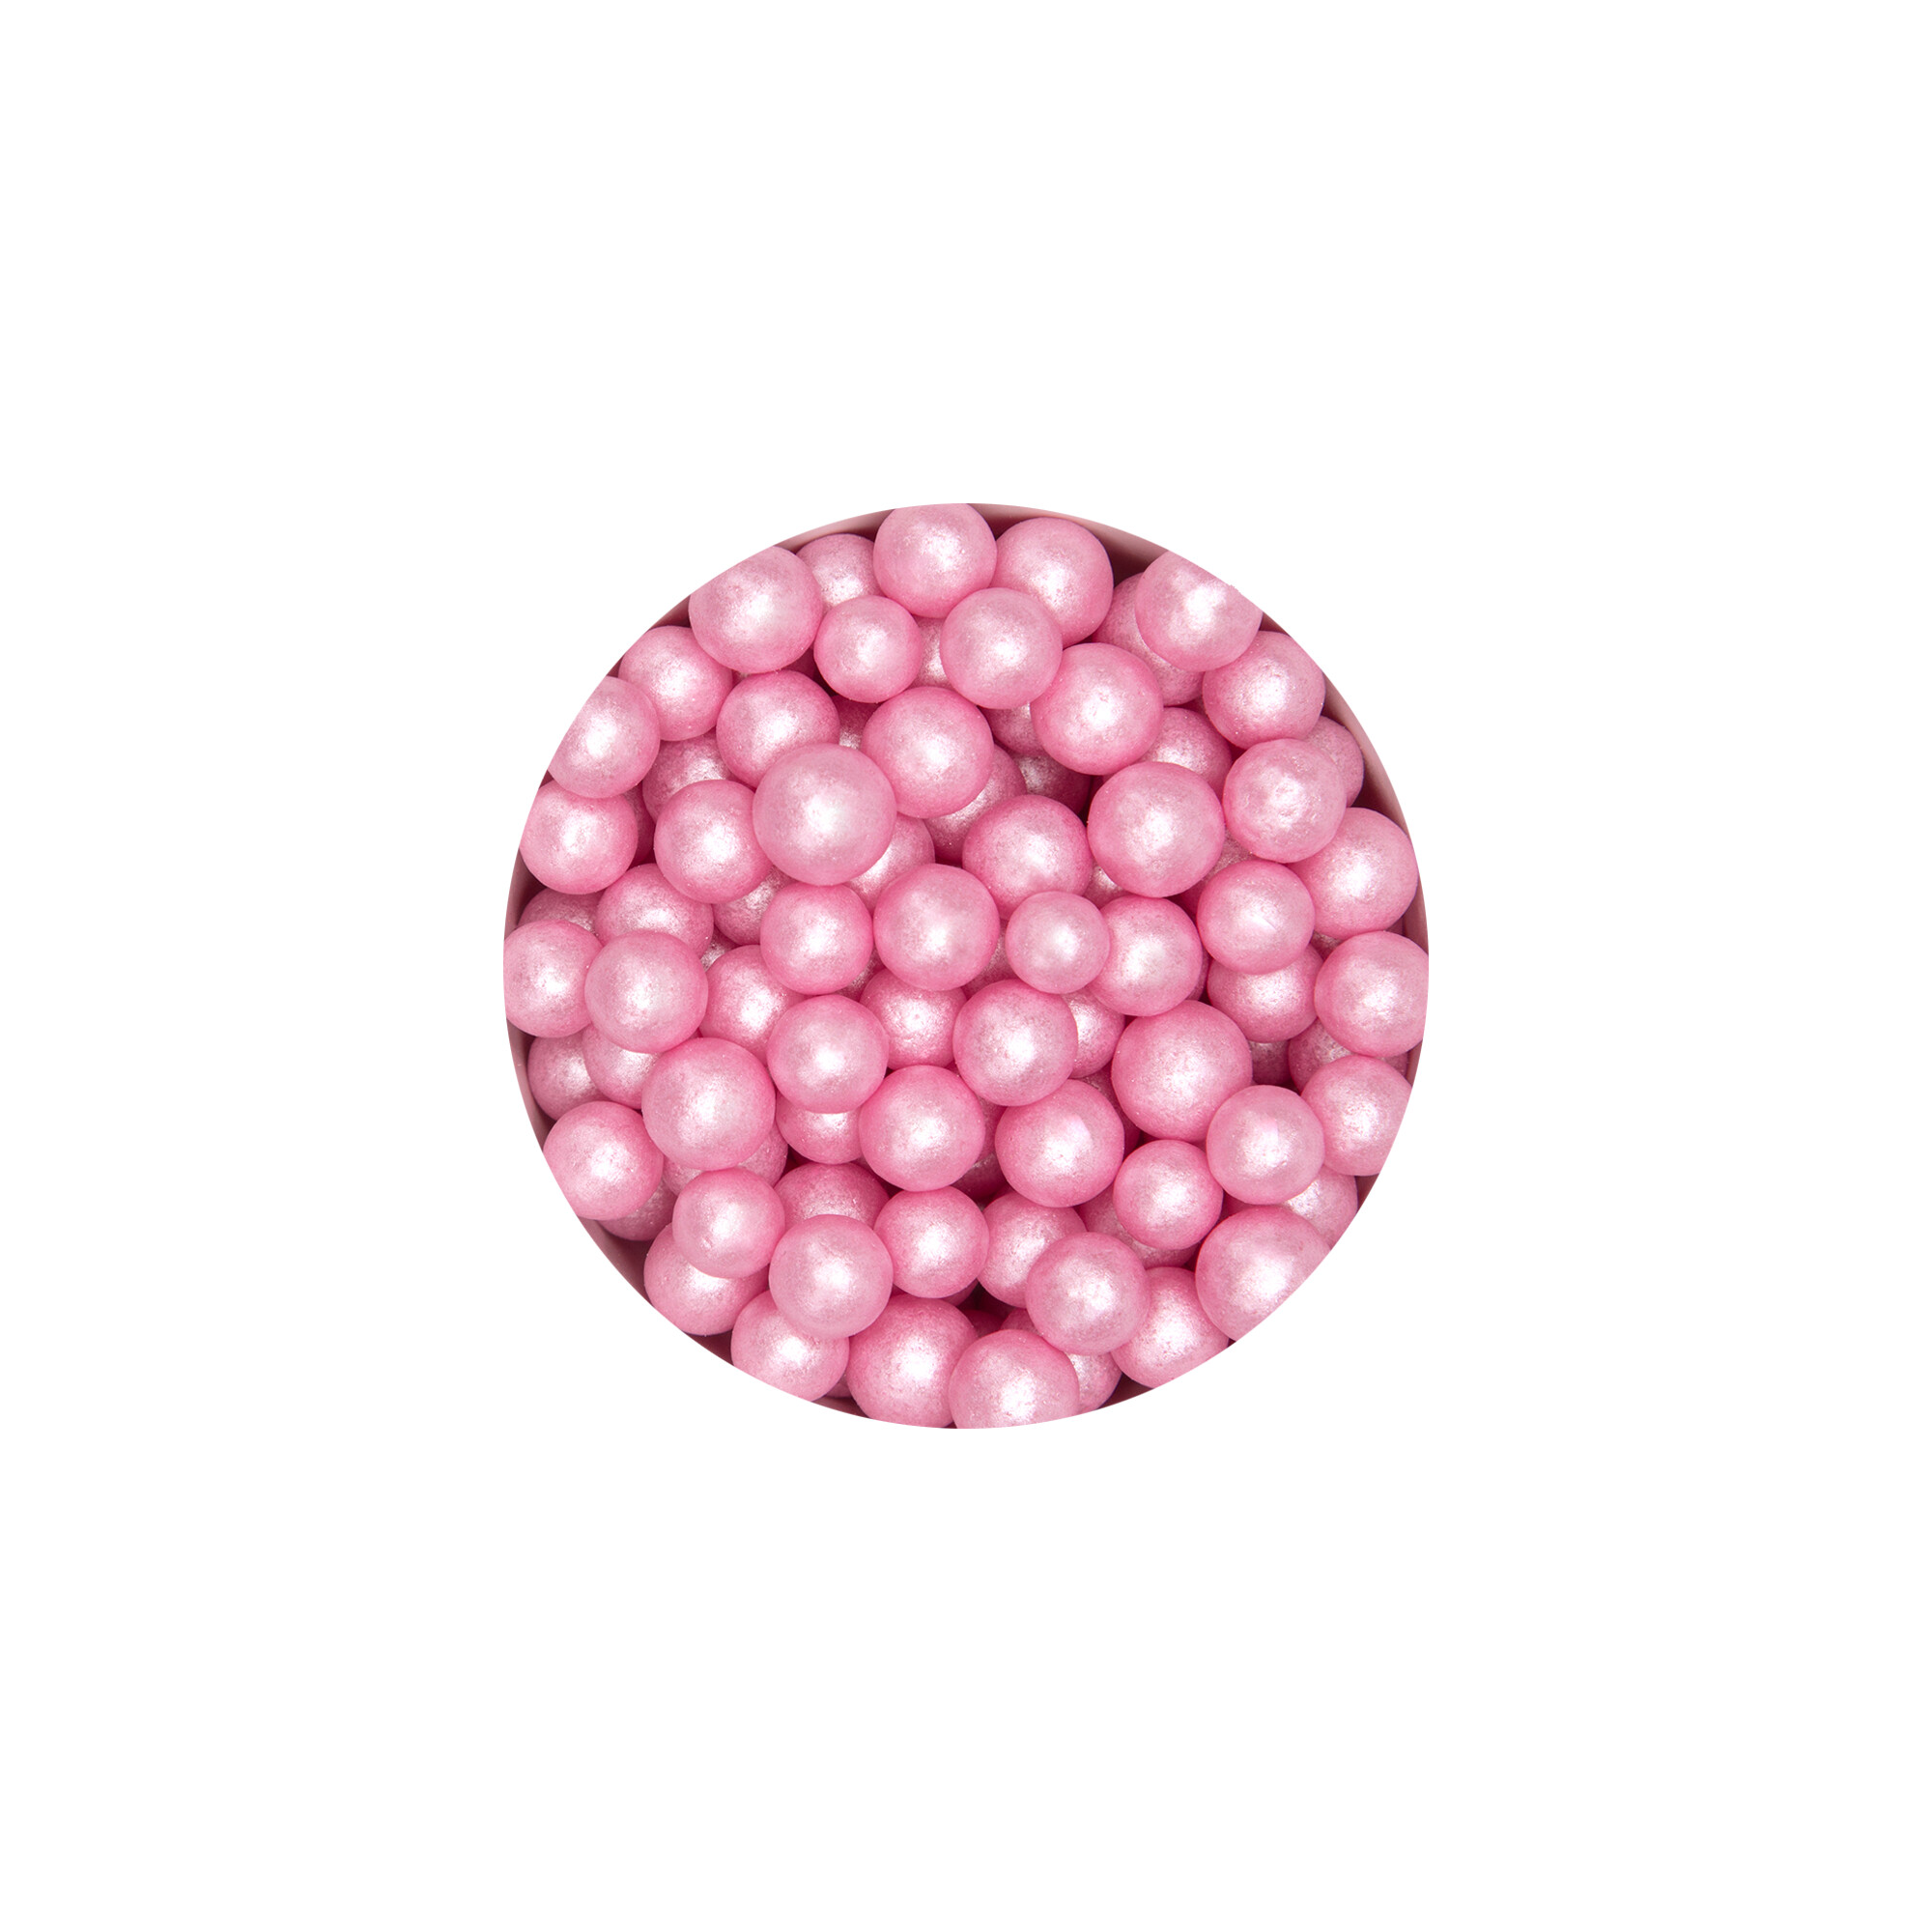 Essbarer Streudekor – Perlen Maxi